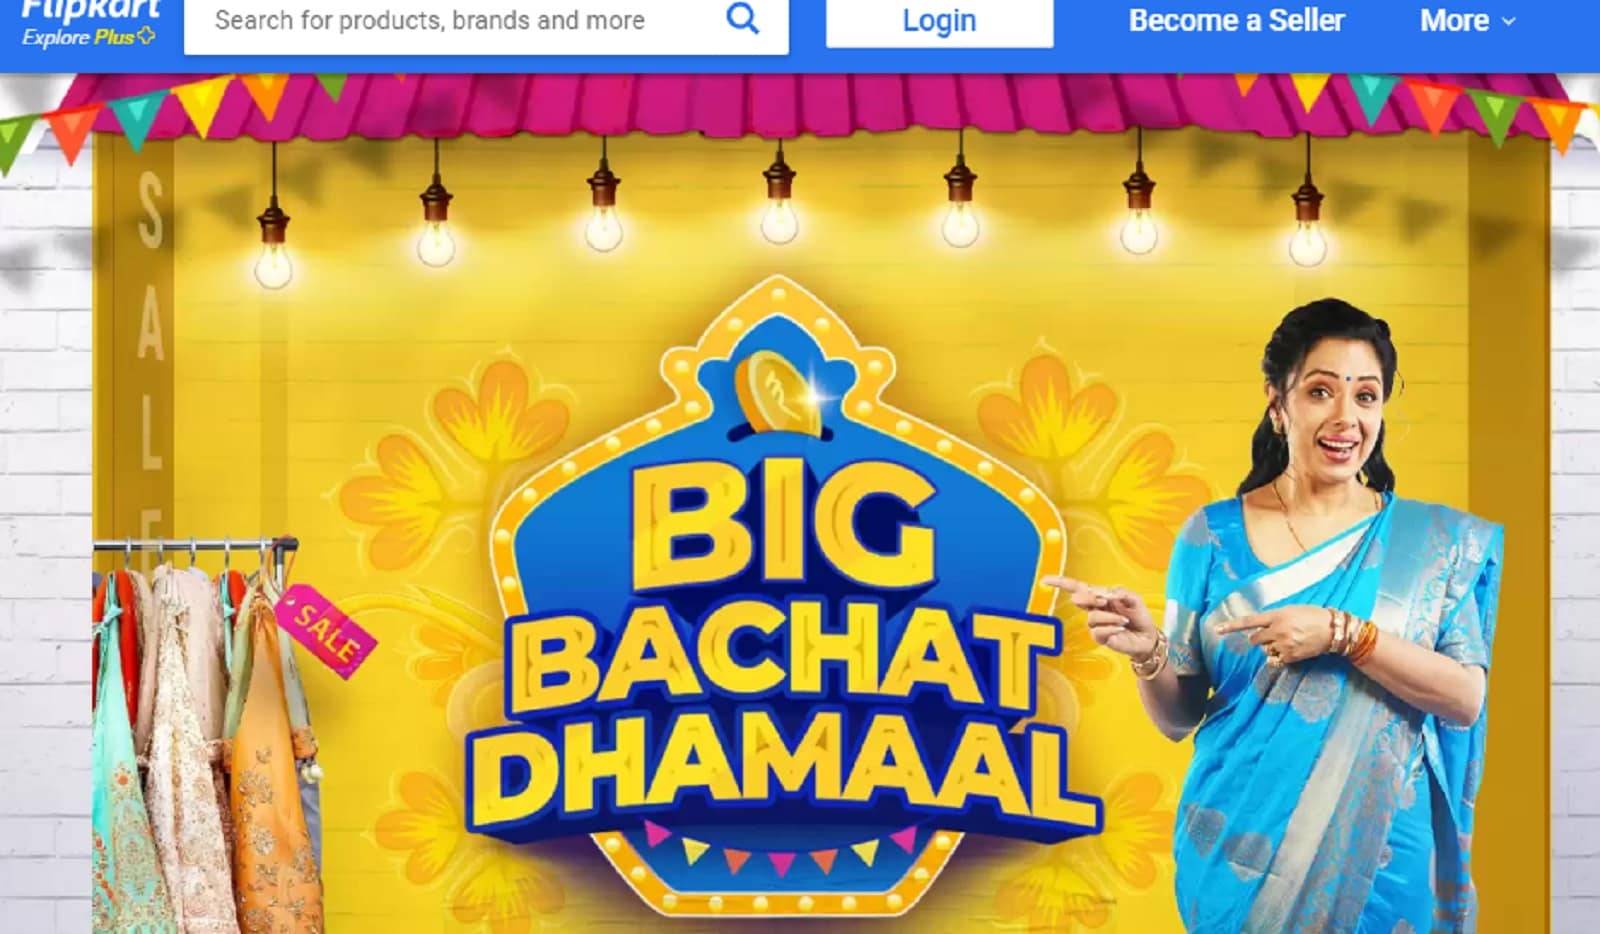 Flipkart Big Bachat Dhamaal सेल में 75 % की छूट में मिल रहा 43 इंच स्मार्ट TV-Flipkart Big Bachat Dhamaal Sale: Up to 75% off on 43-inch Smart TV